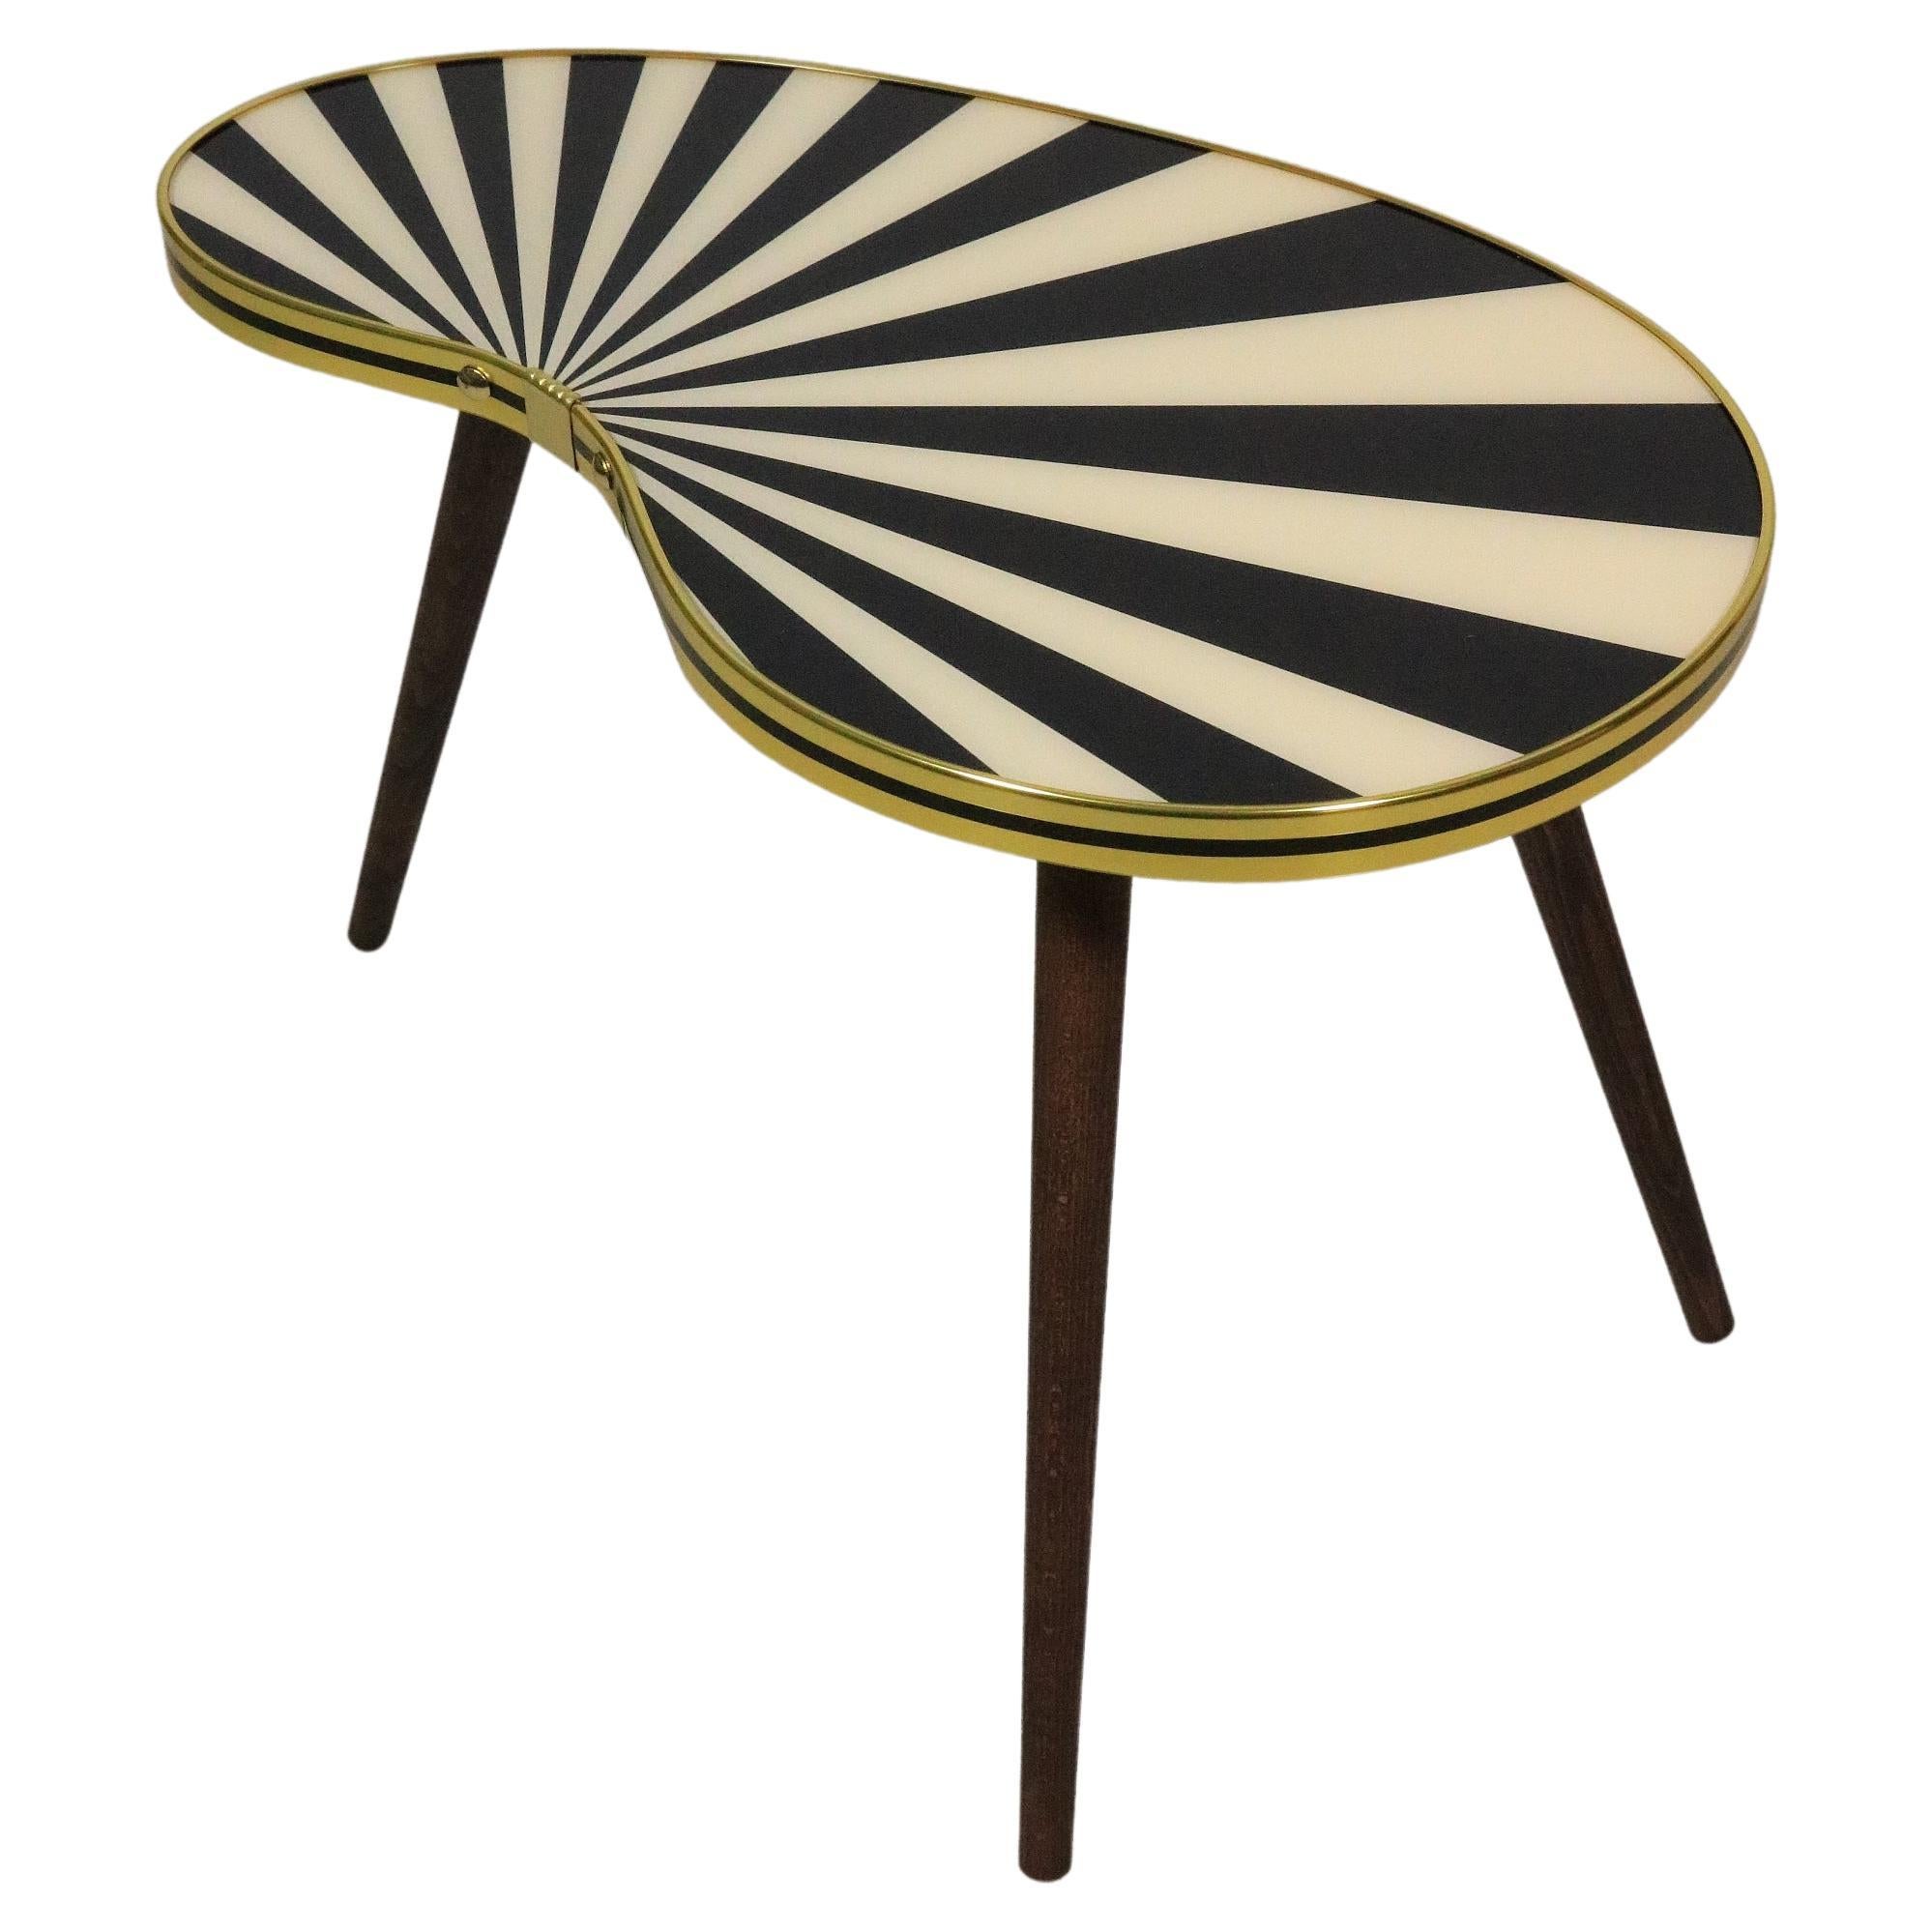 Small Side Table, Kidney Shaped, Black-White Stripes, 3 Elegant Legs, 50s Style For Sale